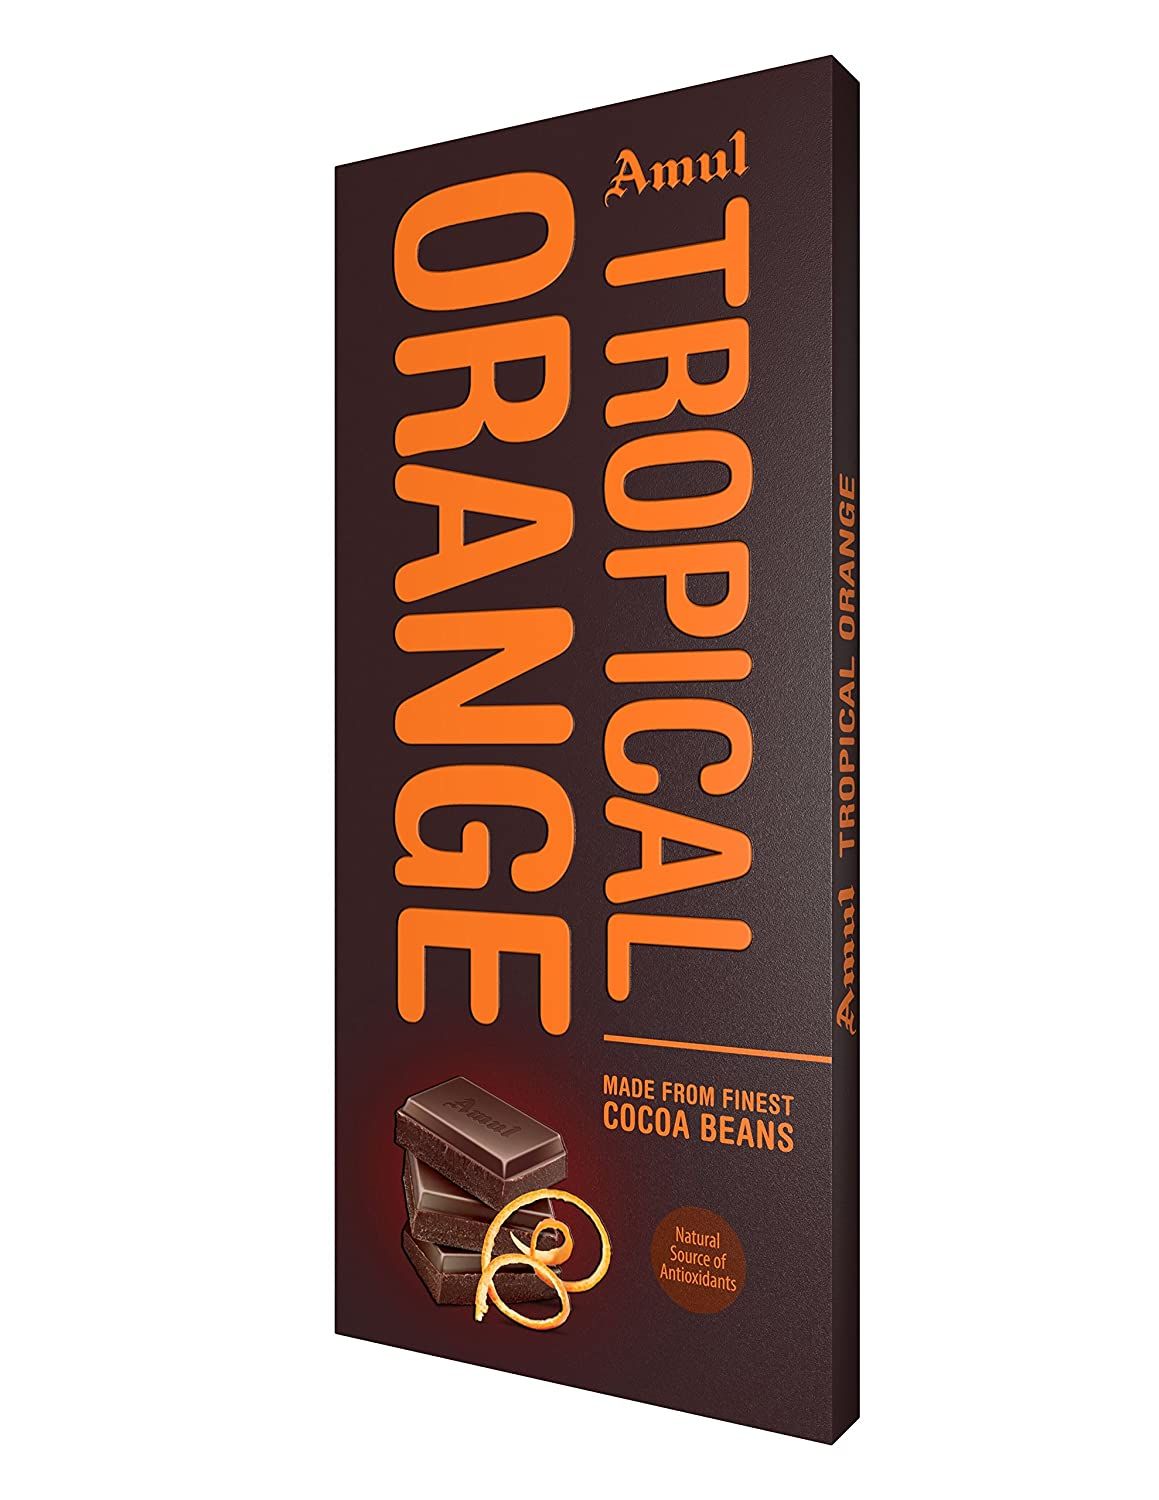 Amul Tropical Orange Chocolate Image